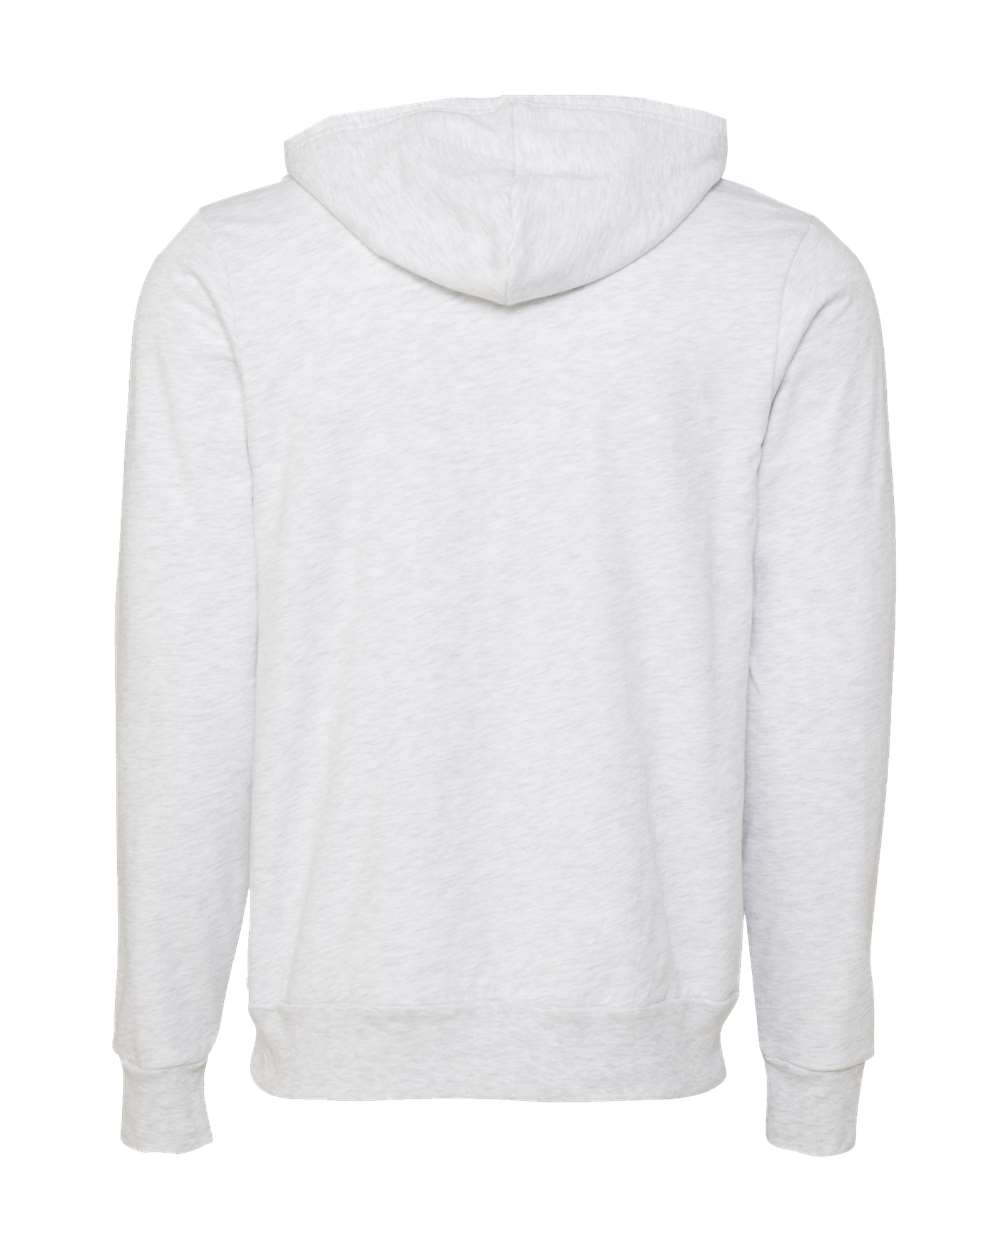 Download Bella + Canvas Unisex Full Zip Up Hooded Sweatshirt Blank ...